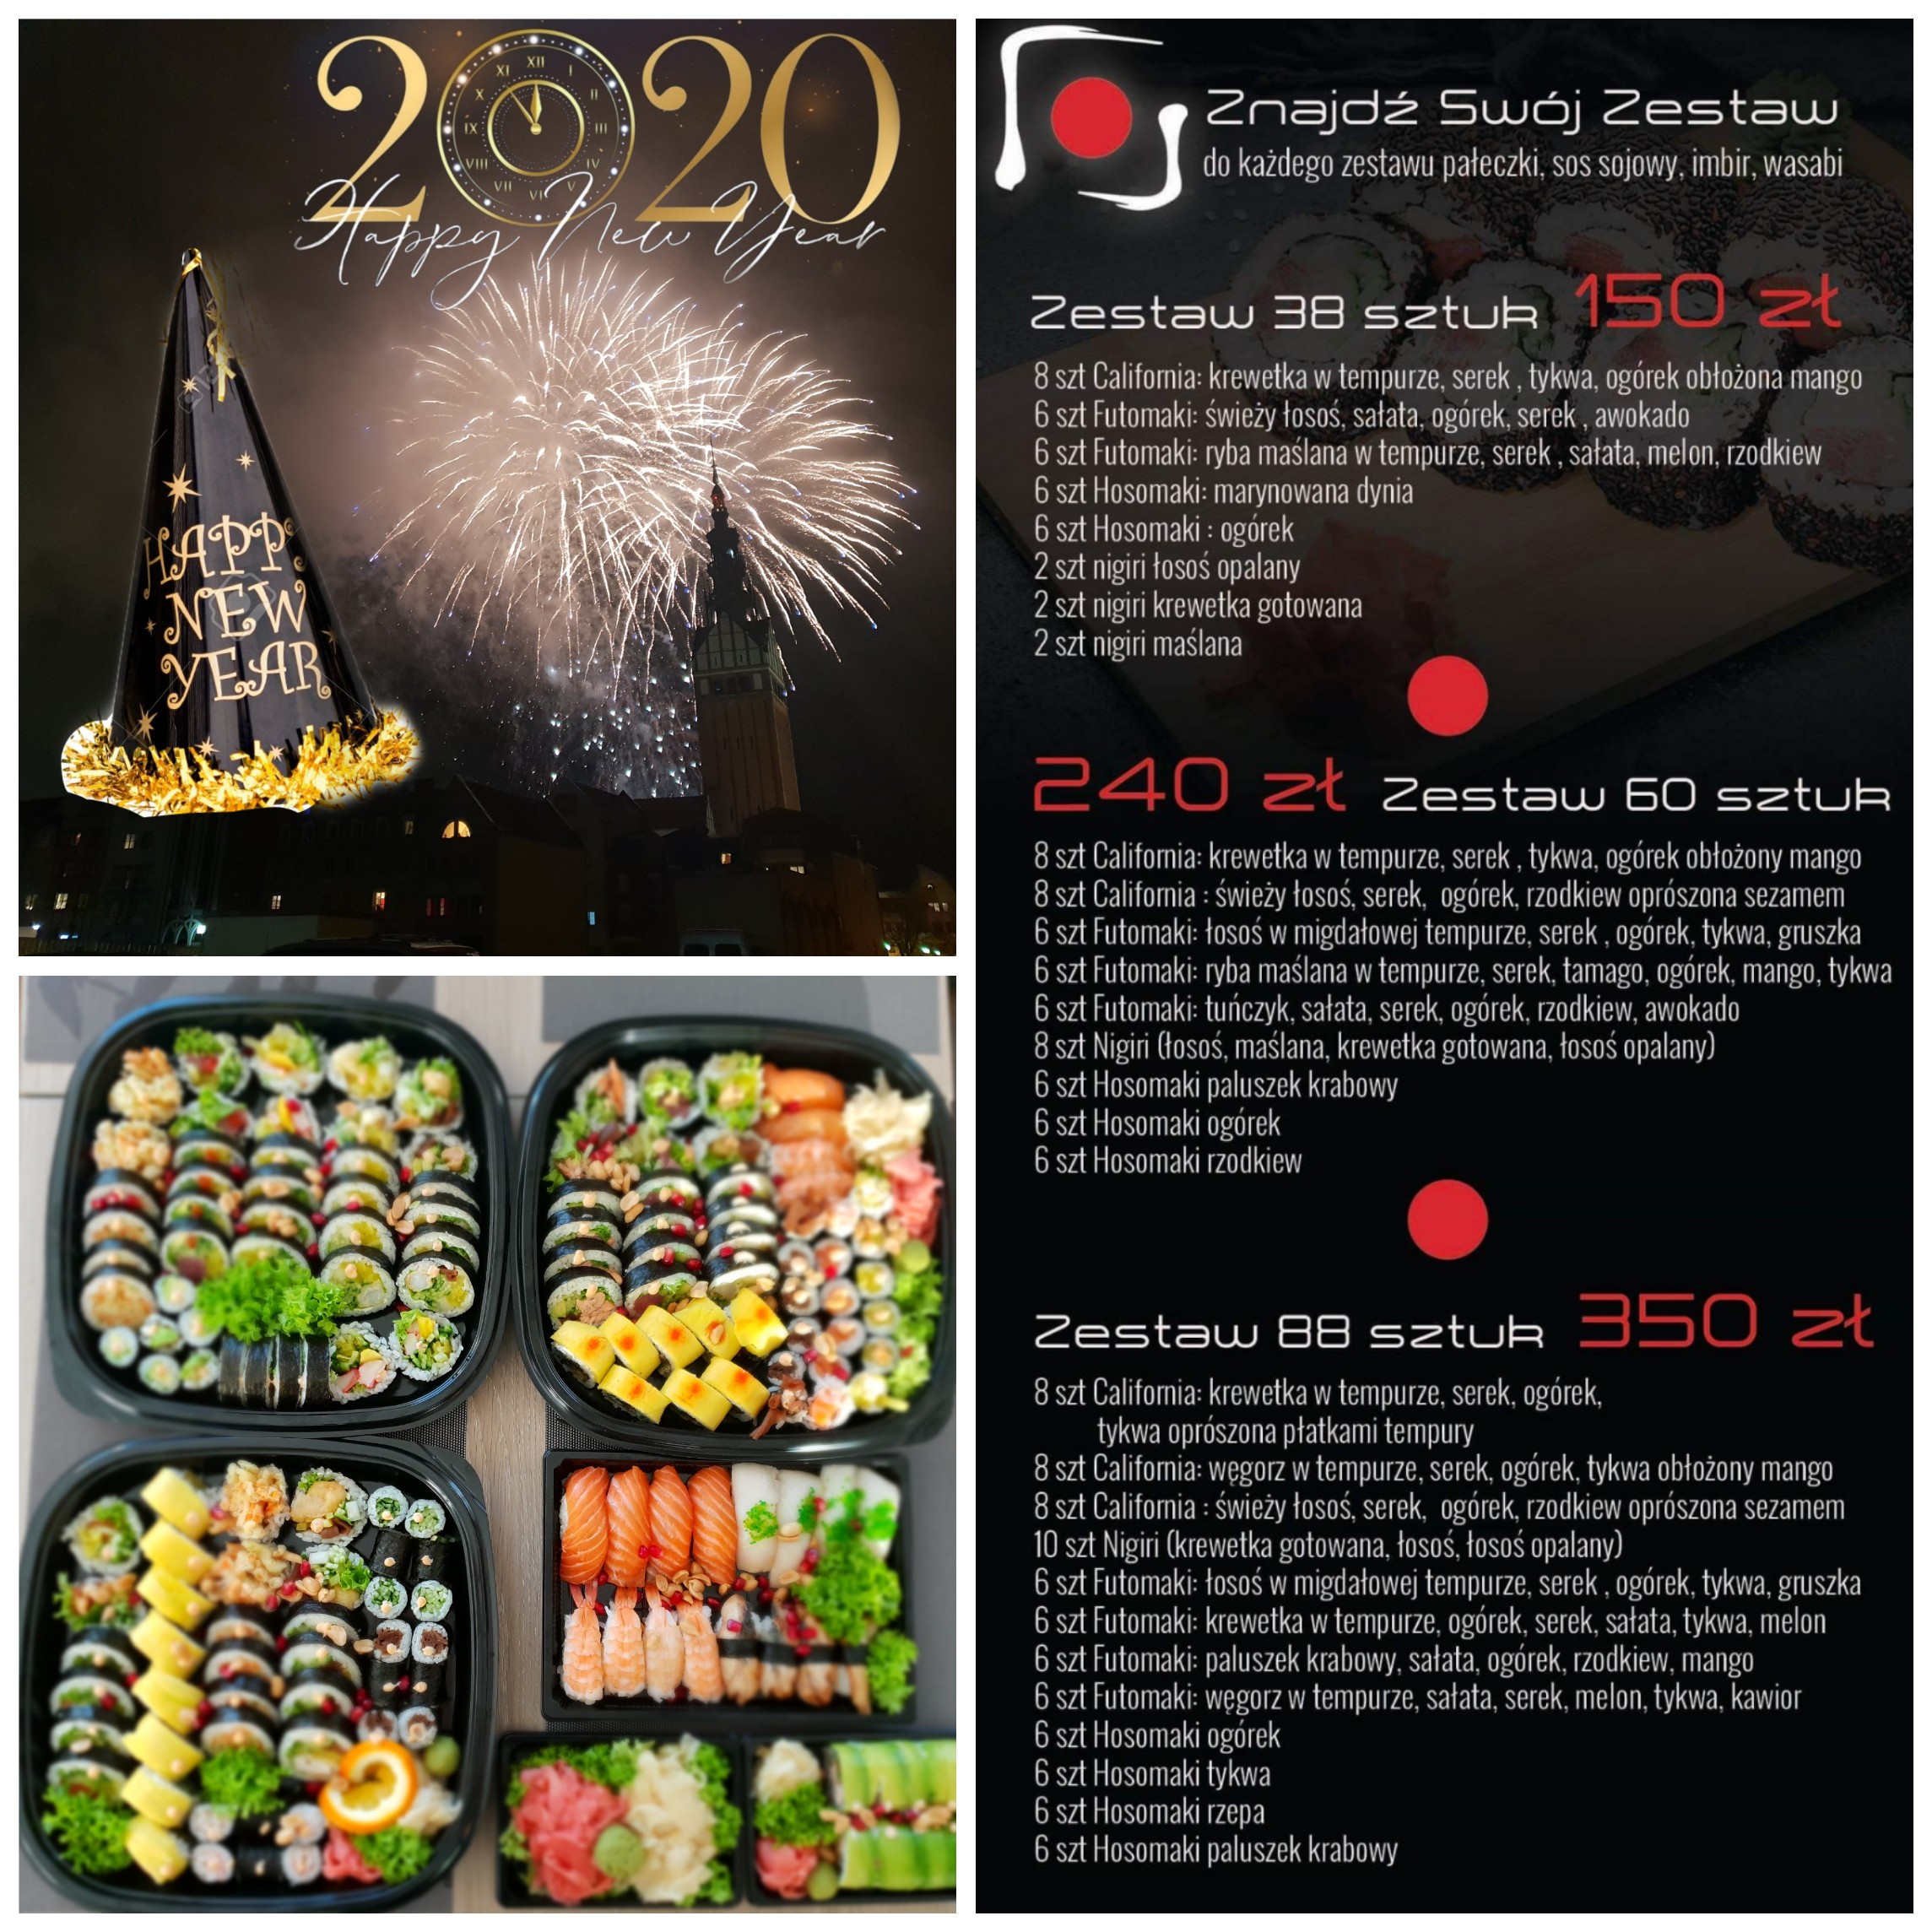 Zamów Sushi na Sylwestra 2019/2020